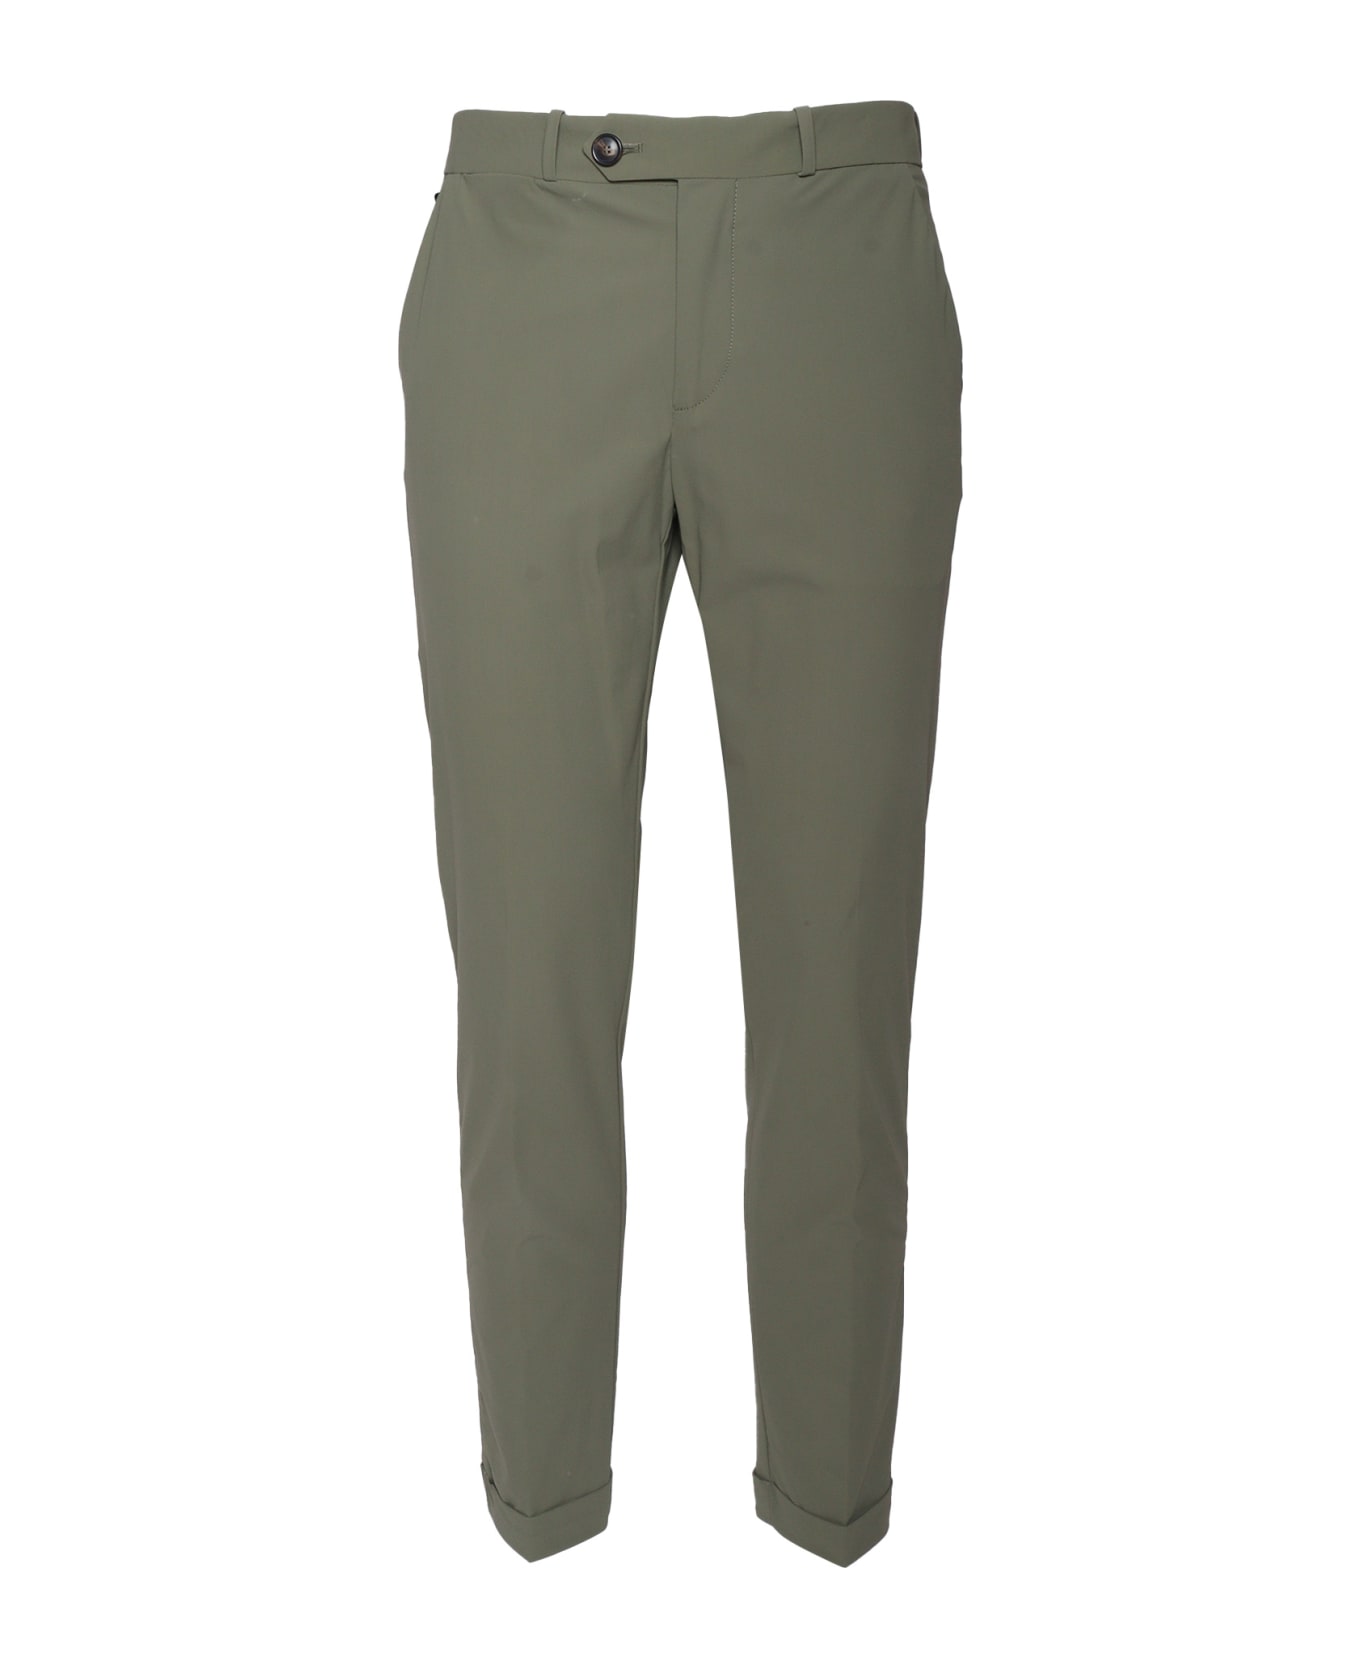 RRD - Roberto Ricci Design Military Green Trousers - GREEN